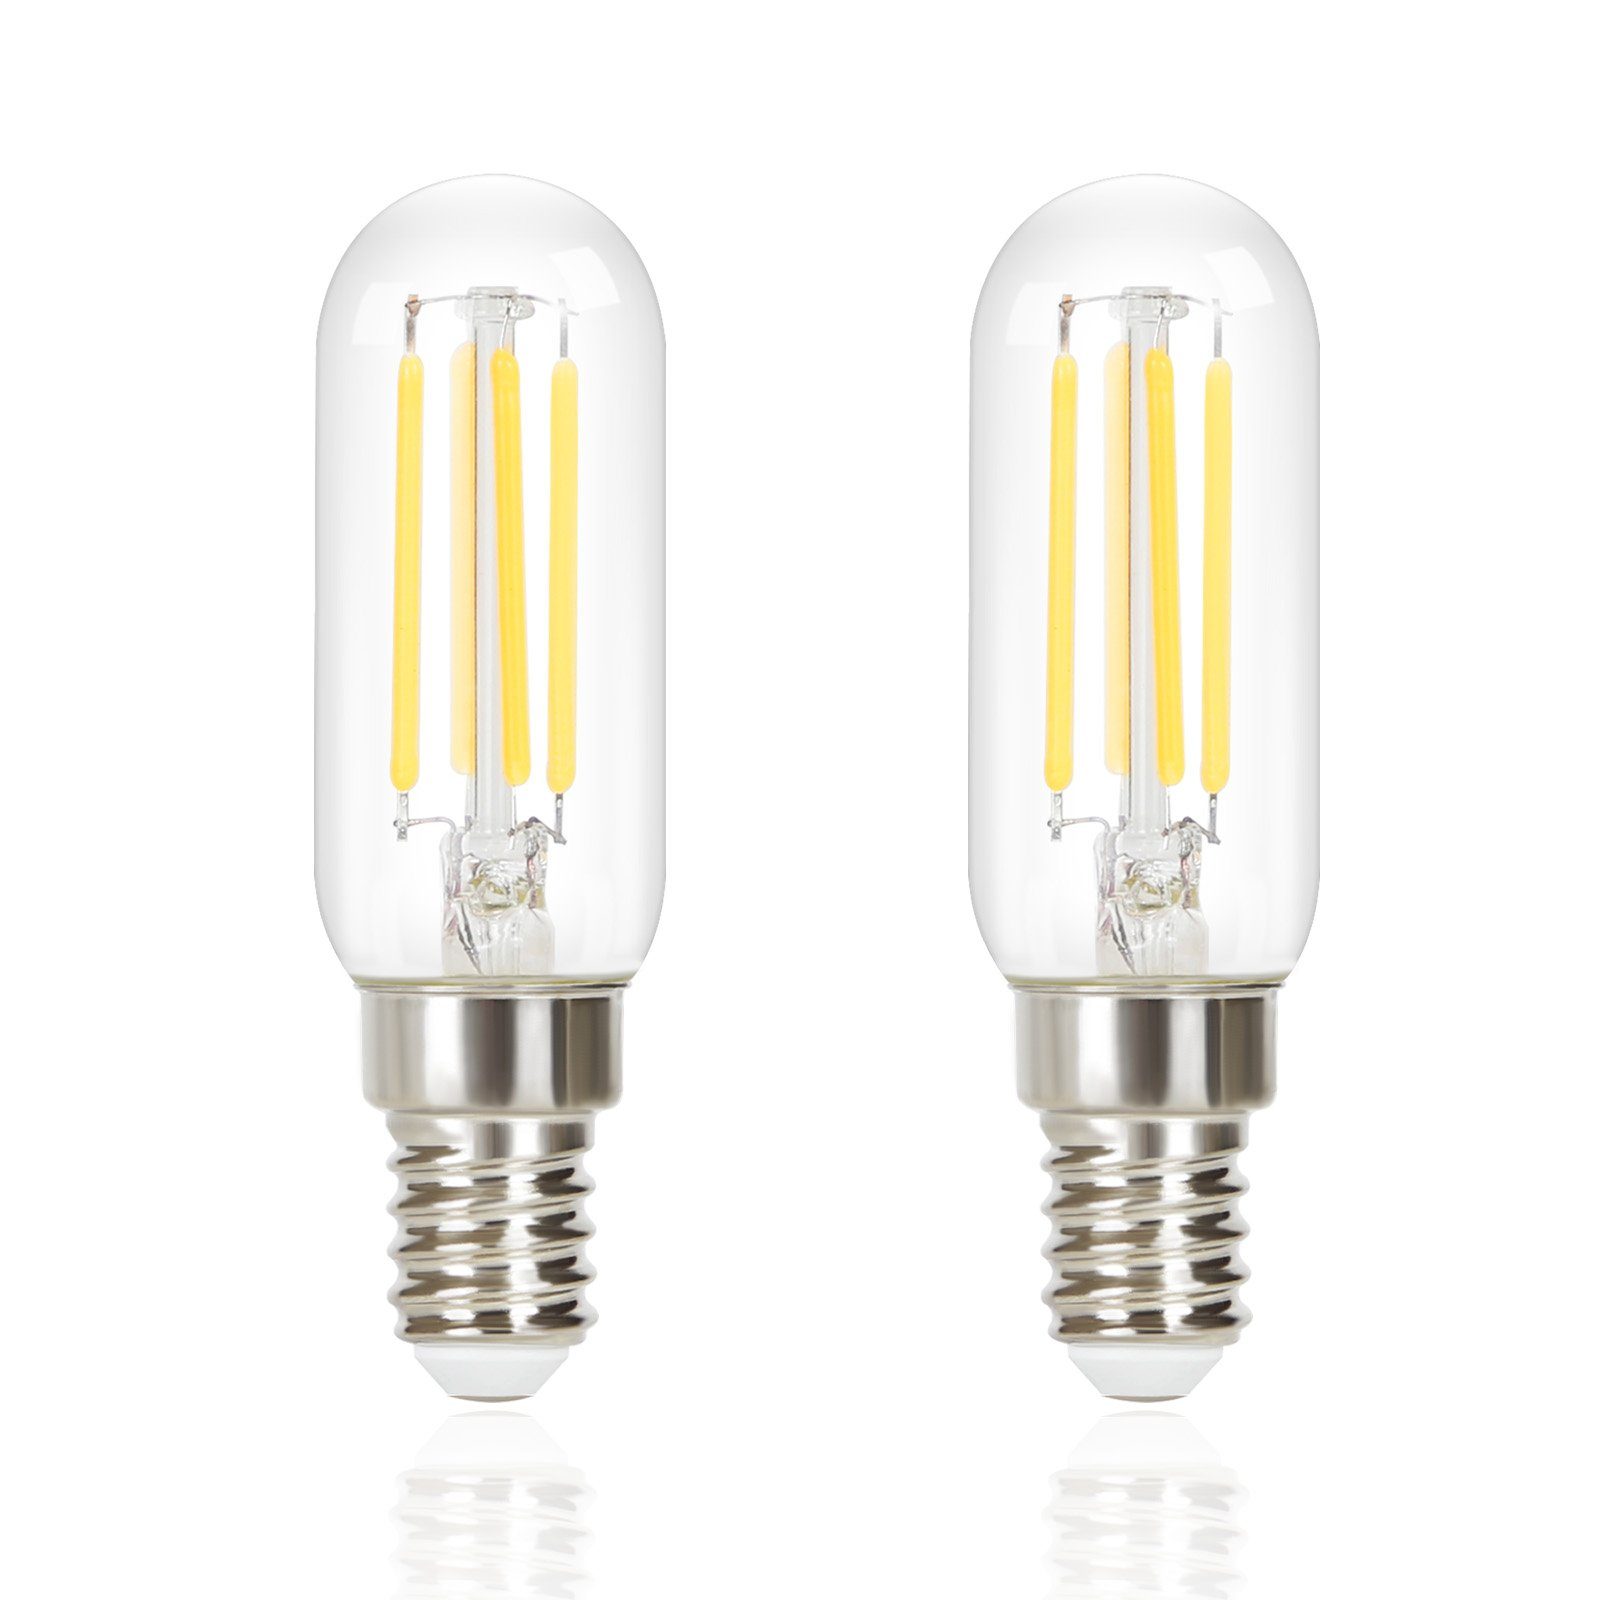 ZMH LED-Leuchtmittel LED Glühbirnen Vintage Lampe Birnen 4W Energiesparlampe, E27, 2 St., 6000k, nicht dimmbar Transparent